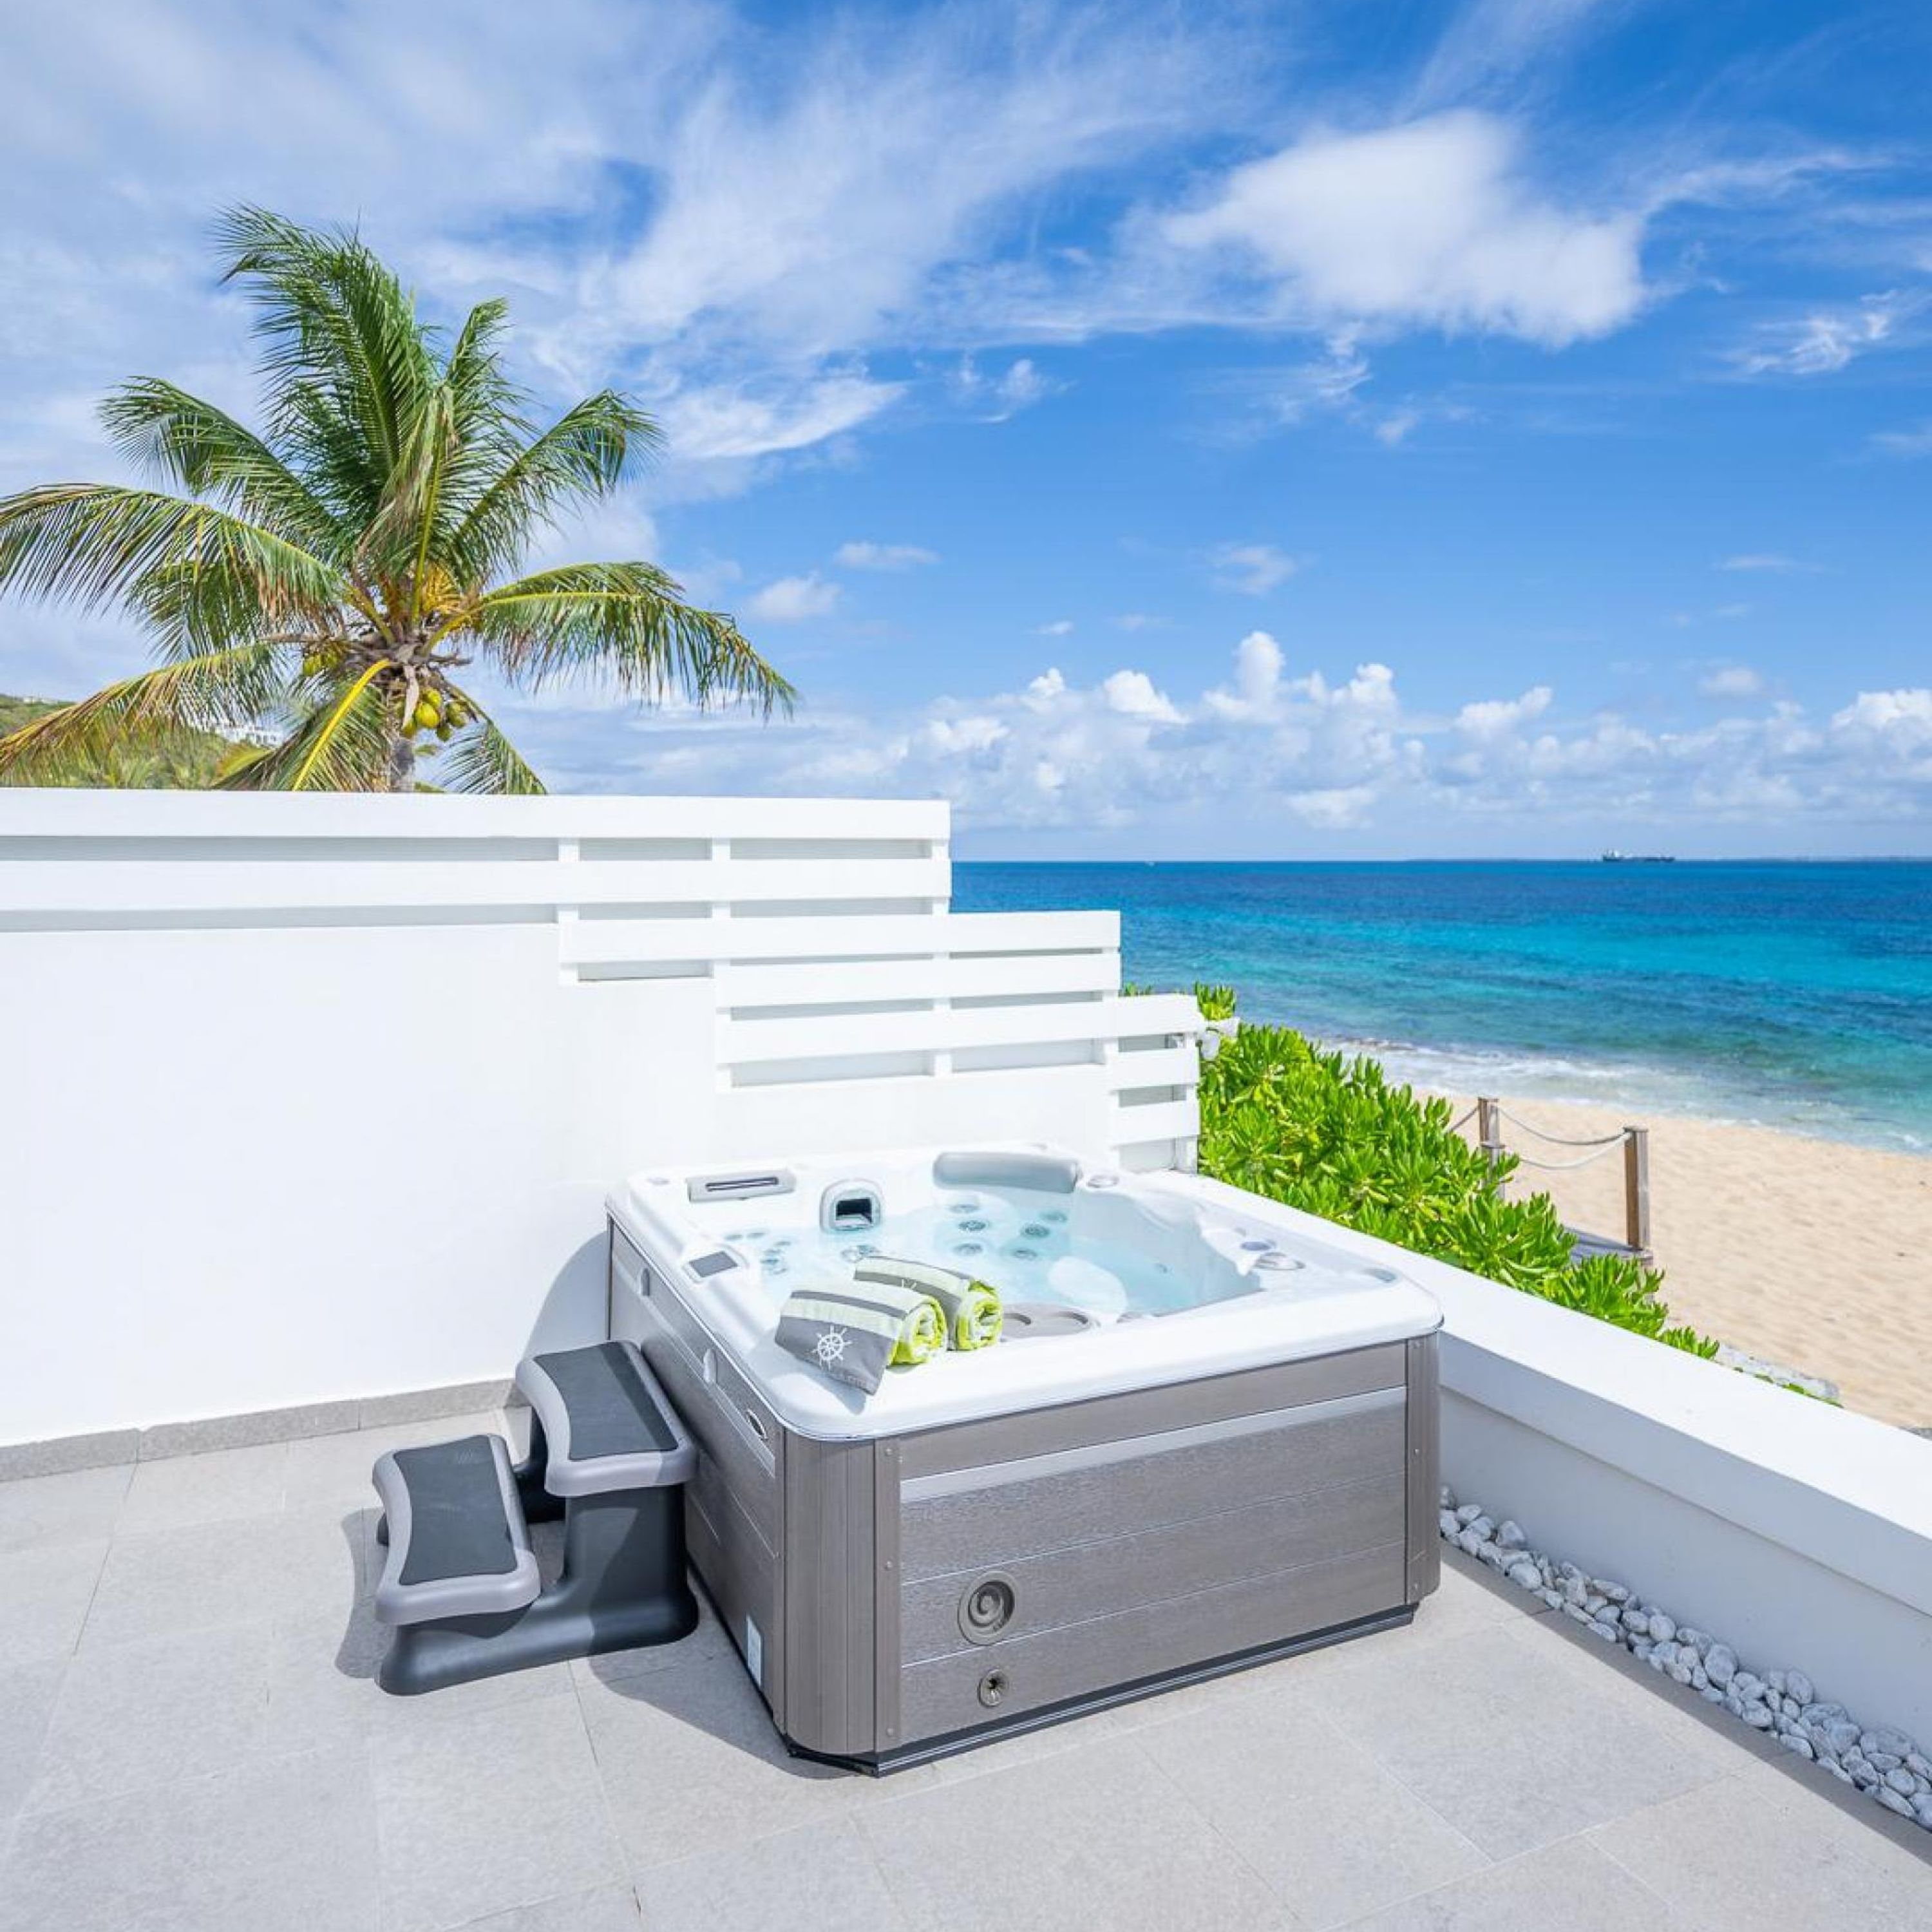 La Perla Bianca - 1 BR Beachfront Luxury Villa offering utmost privacy